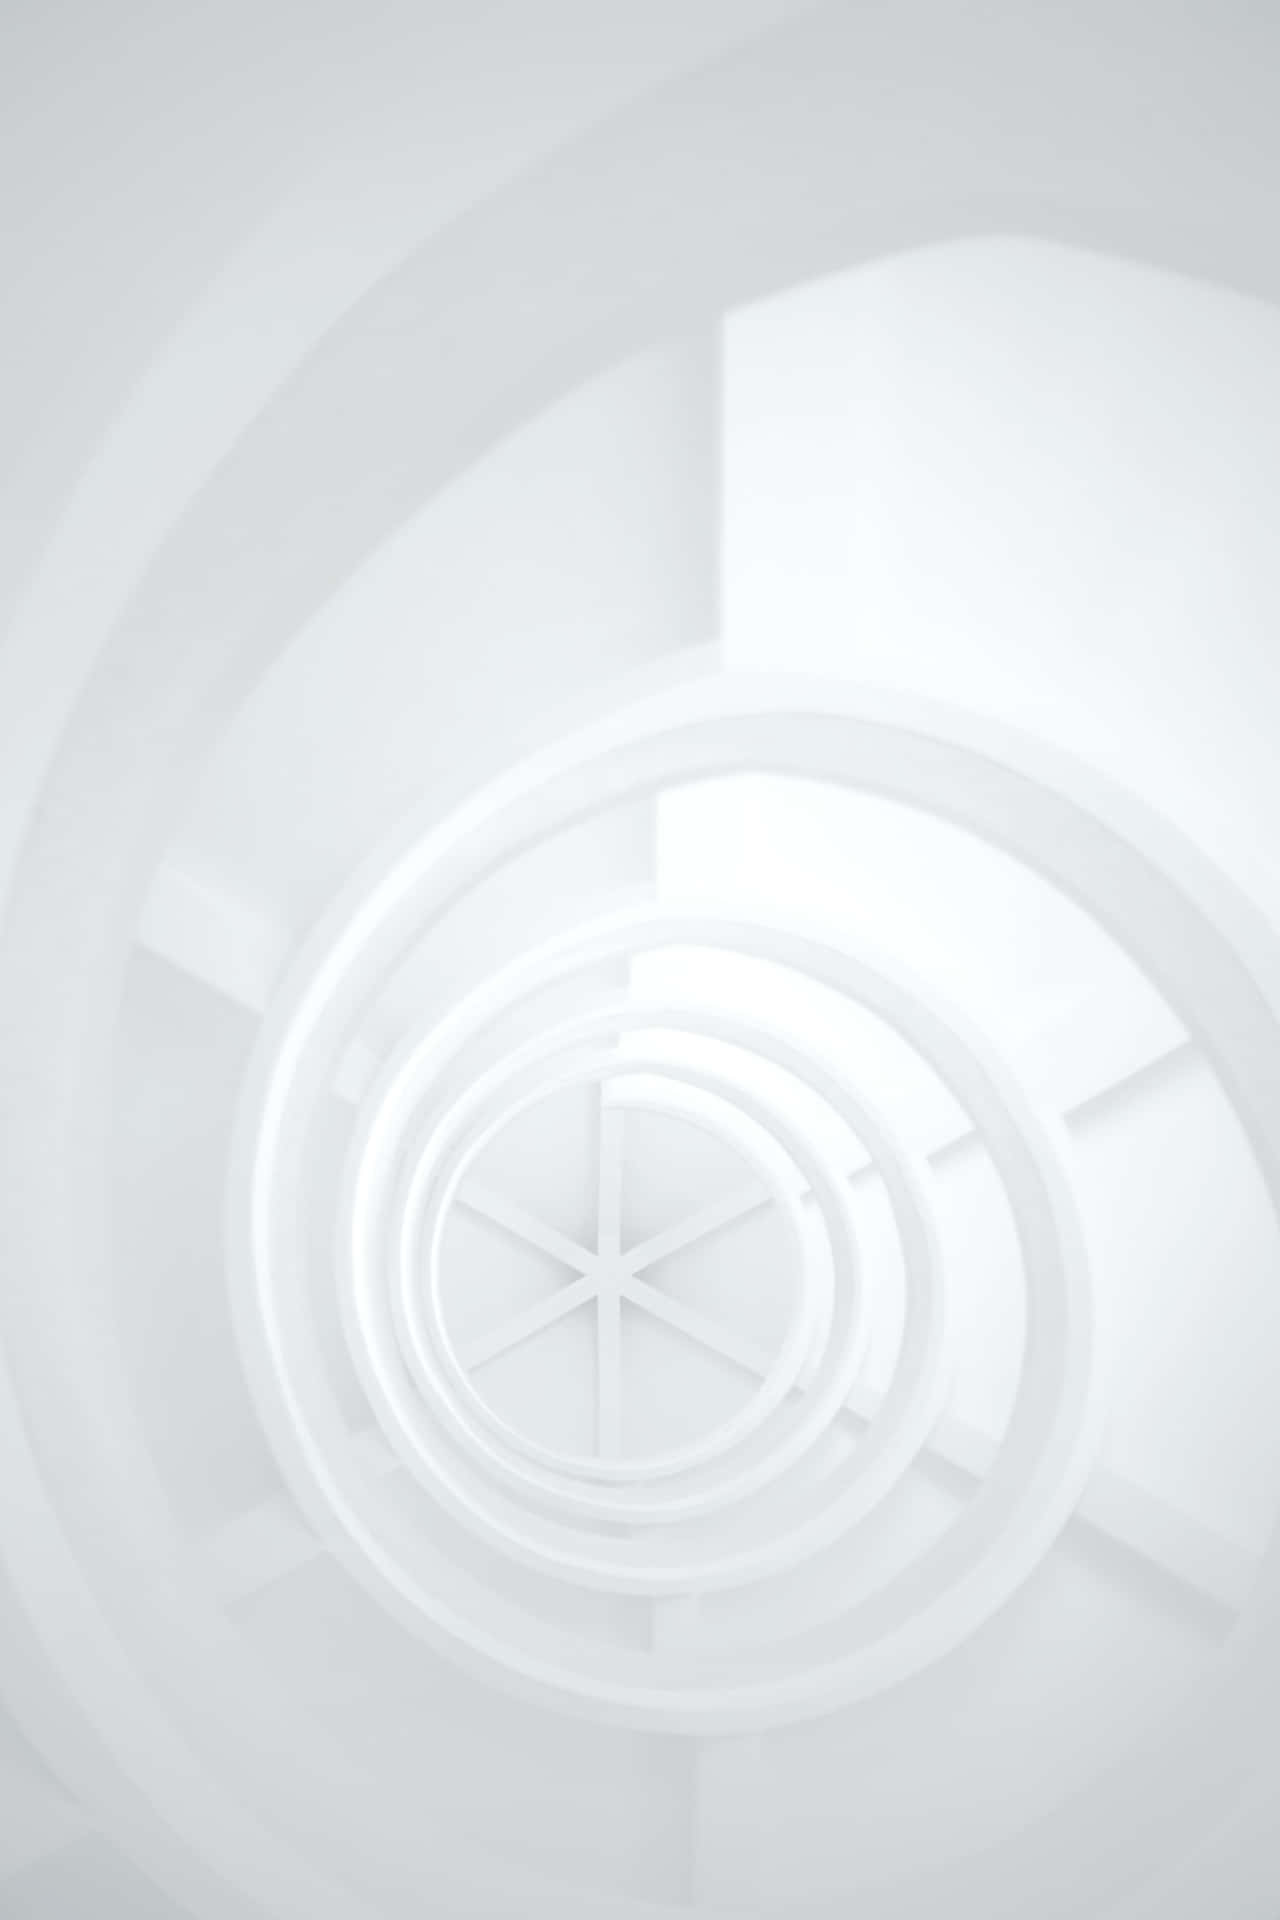 White Image Background Spiral Gray